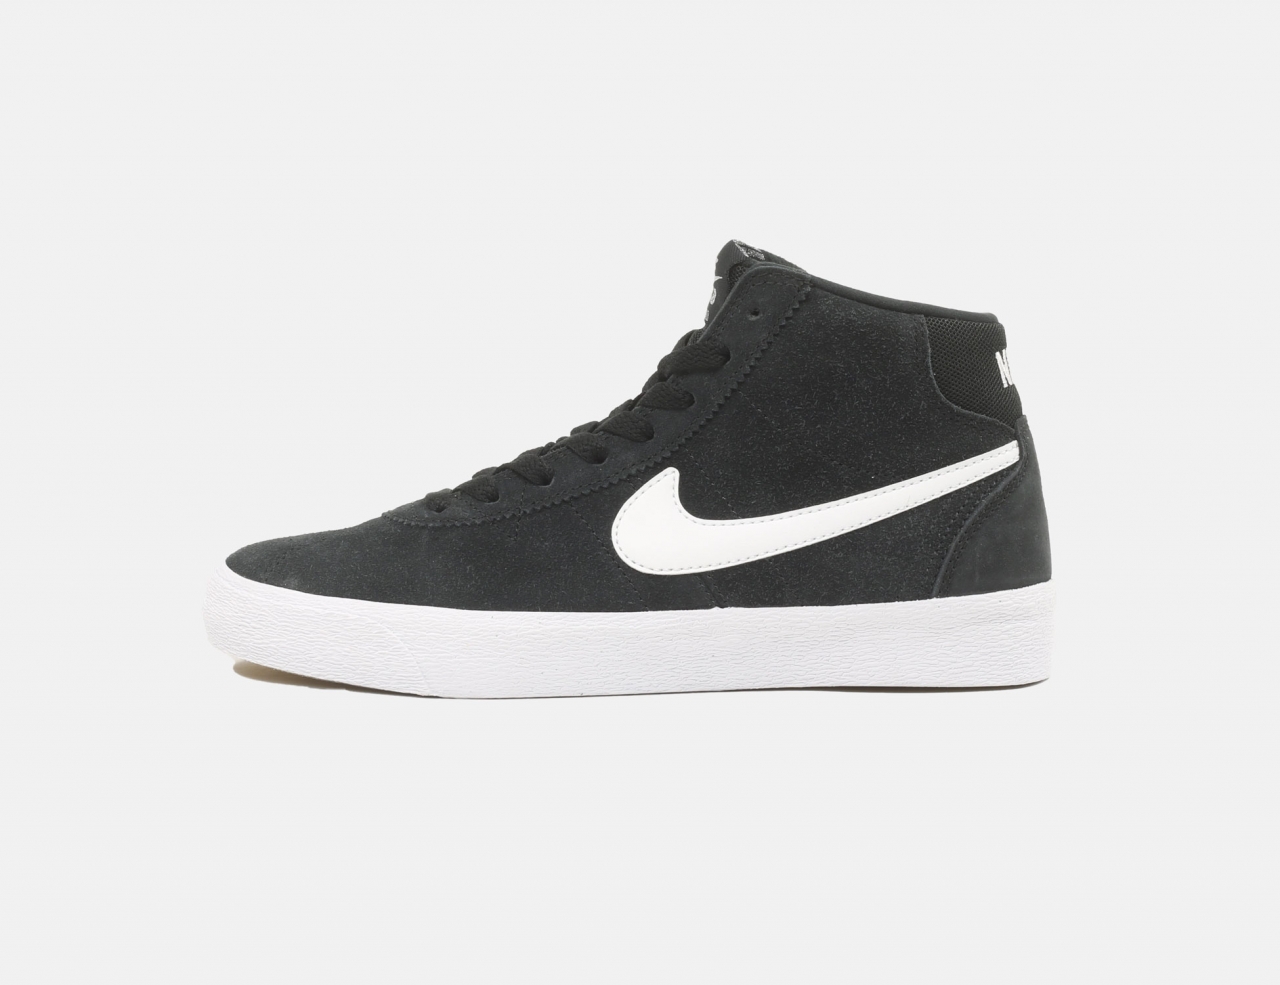 Nike SB WMNS Bruin Hi Sneaker - Black / White